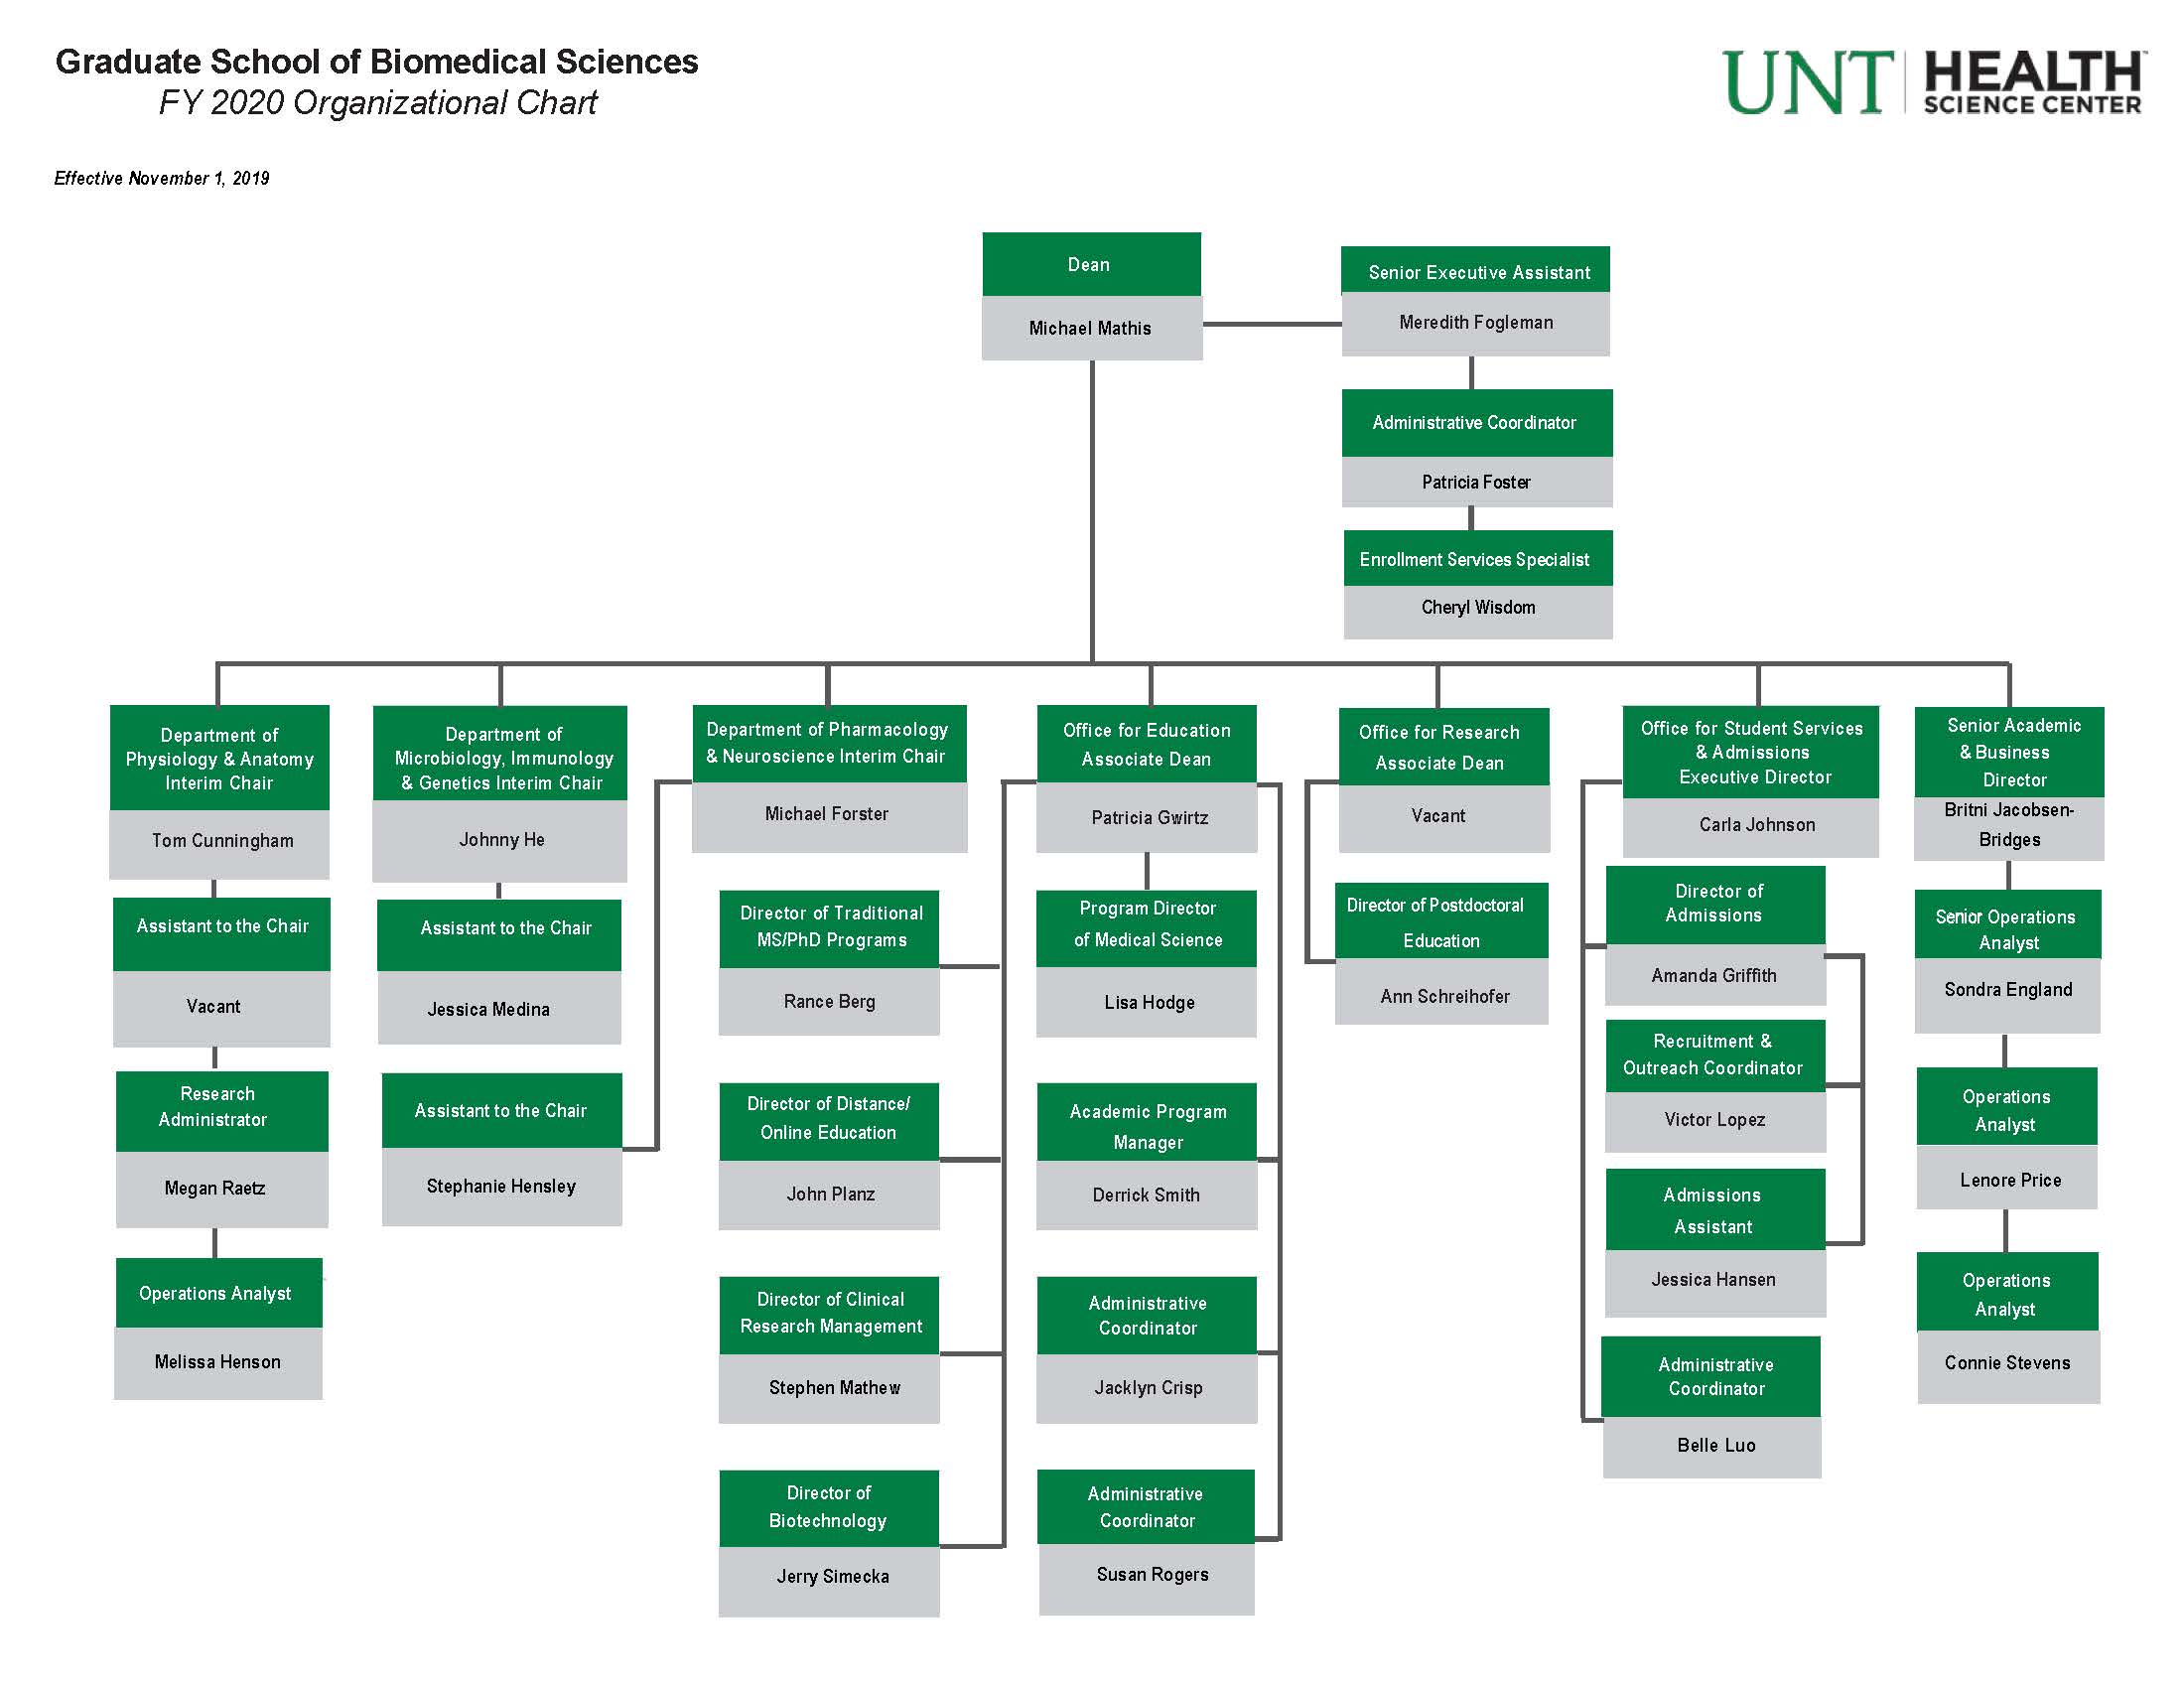 Organization Chart - Graduate School of Biomedical Sciences